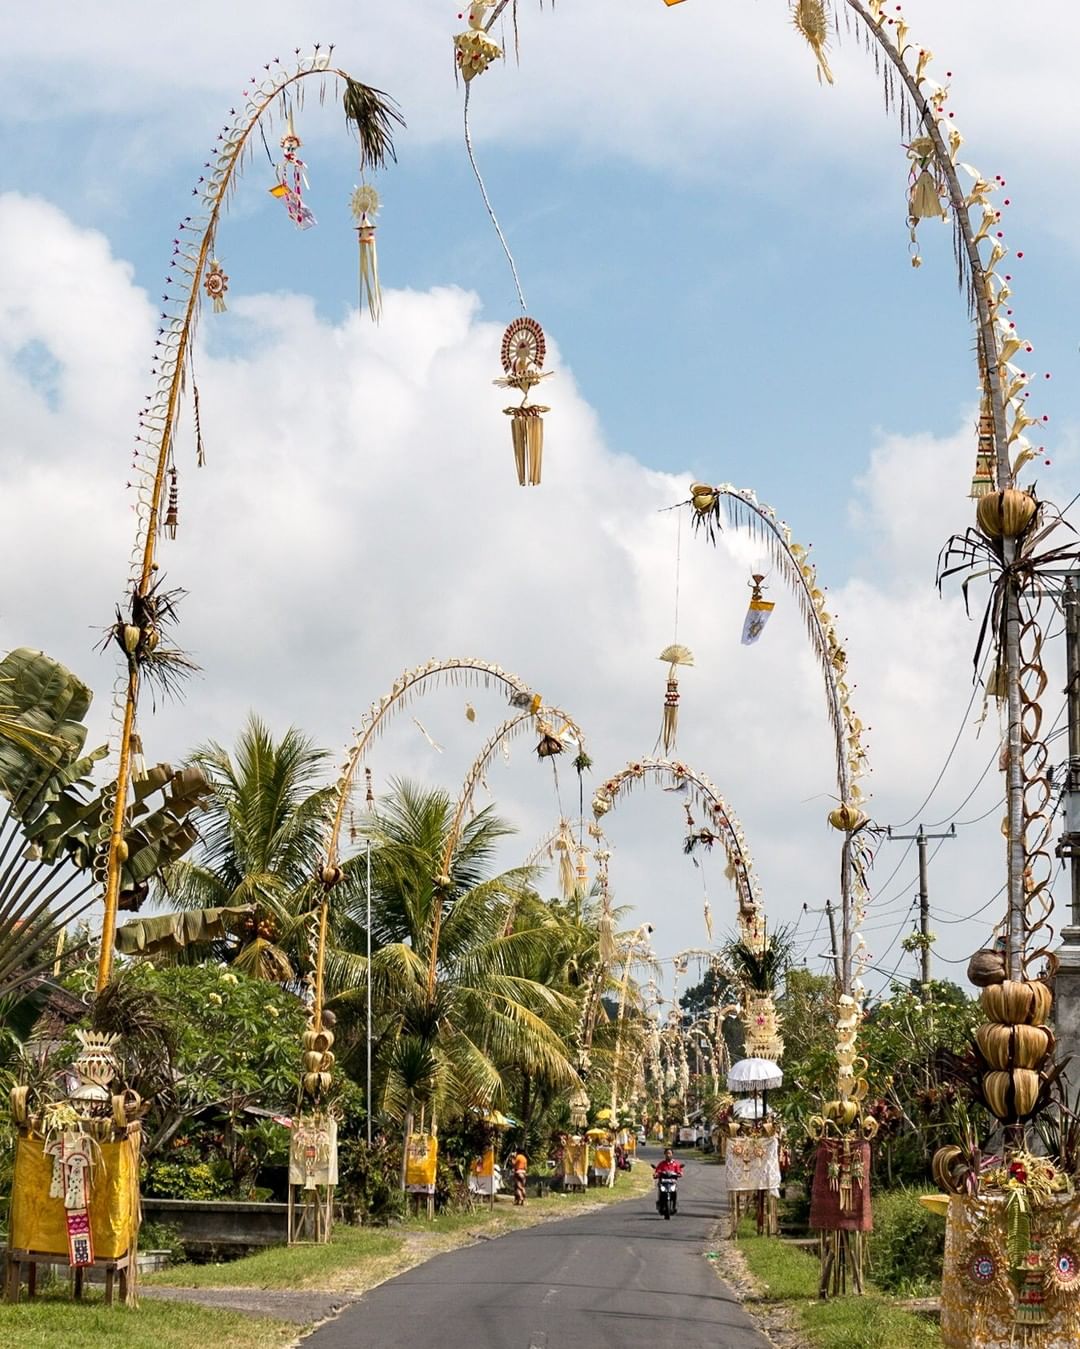 Galungan Festival 2020: Balinese Celebrate Triumph Of Good Over Evil